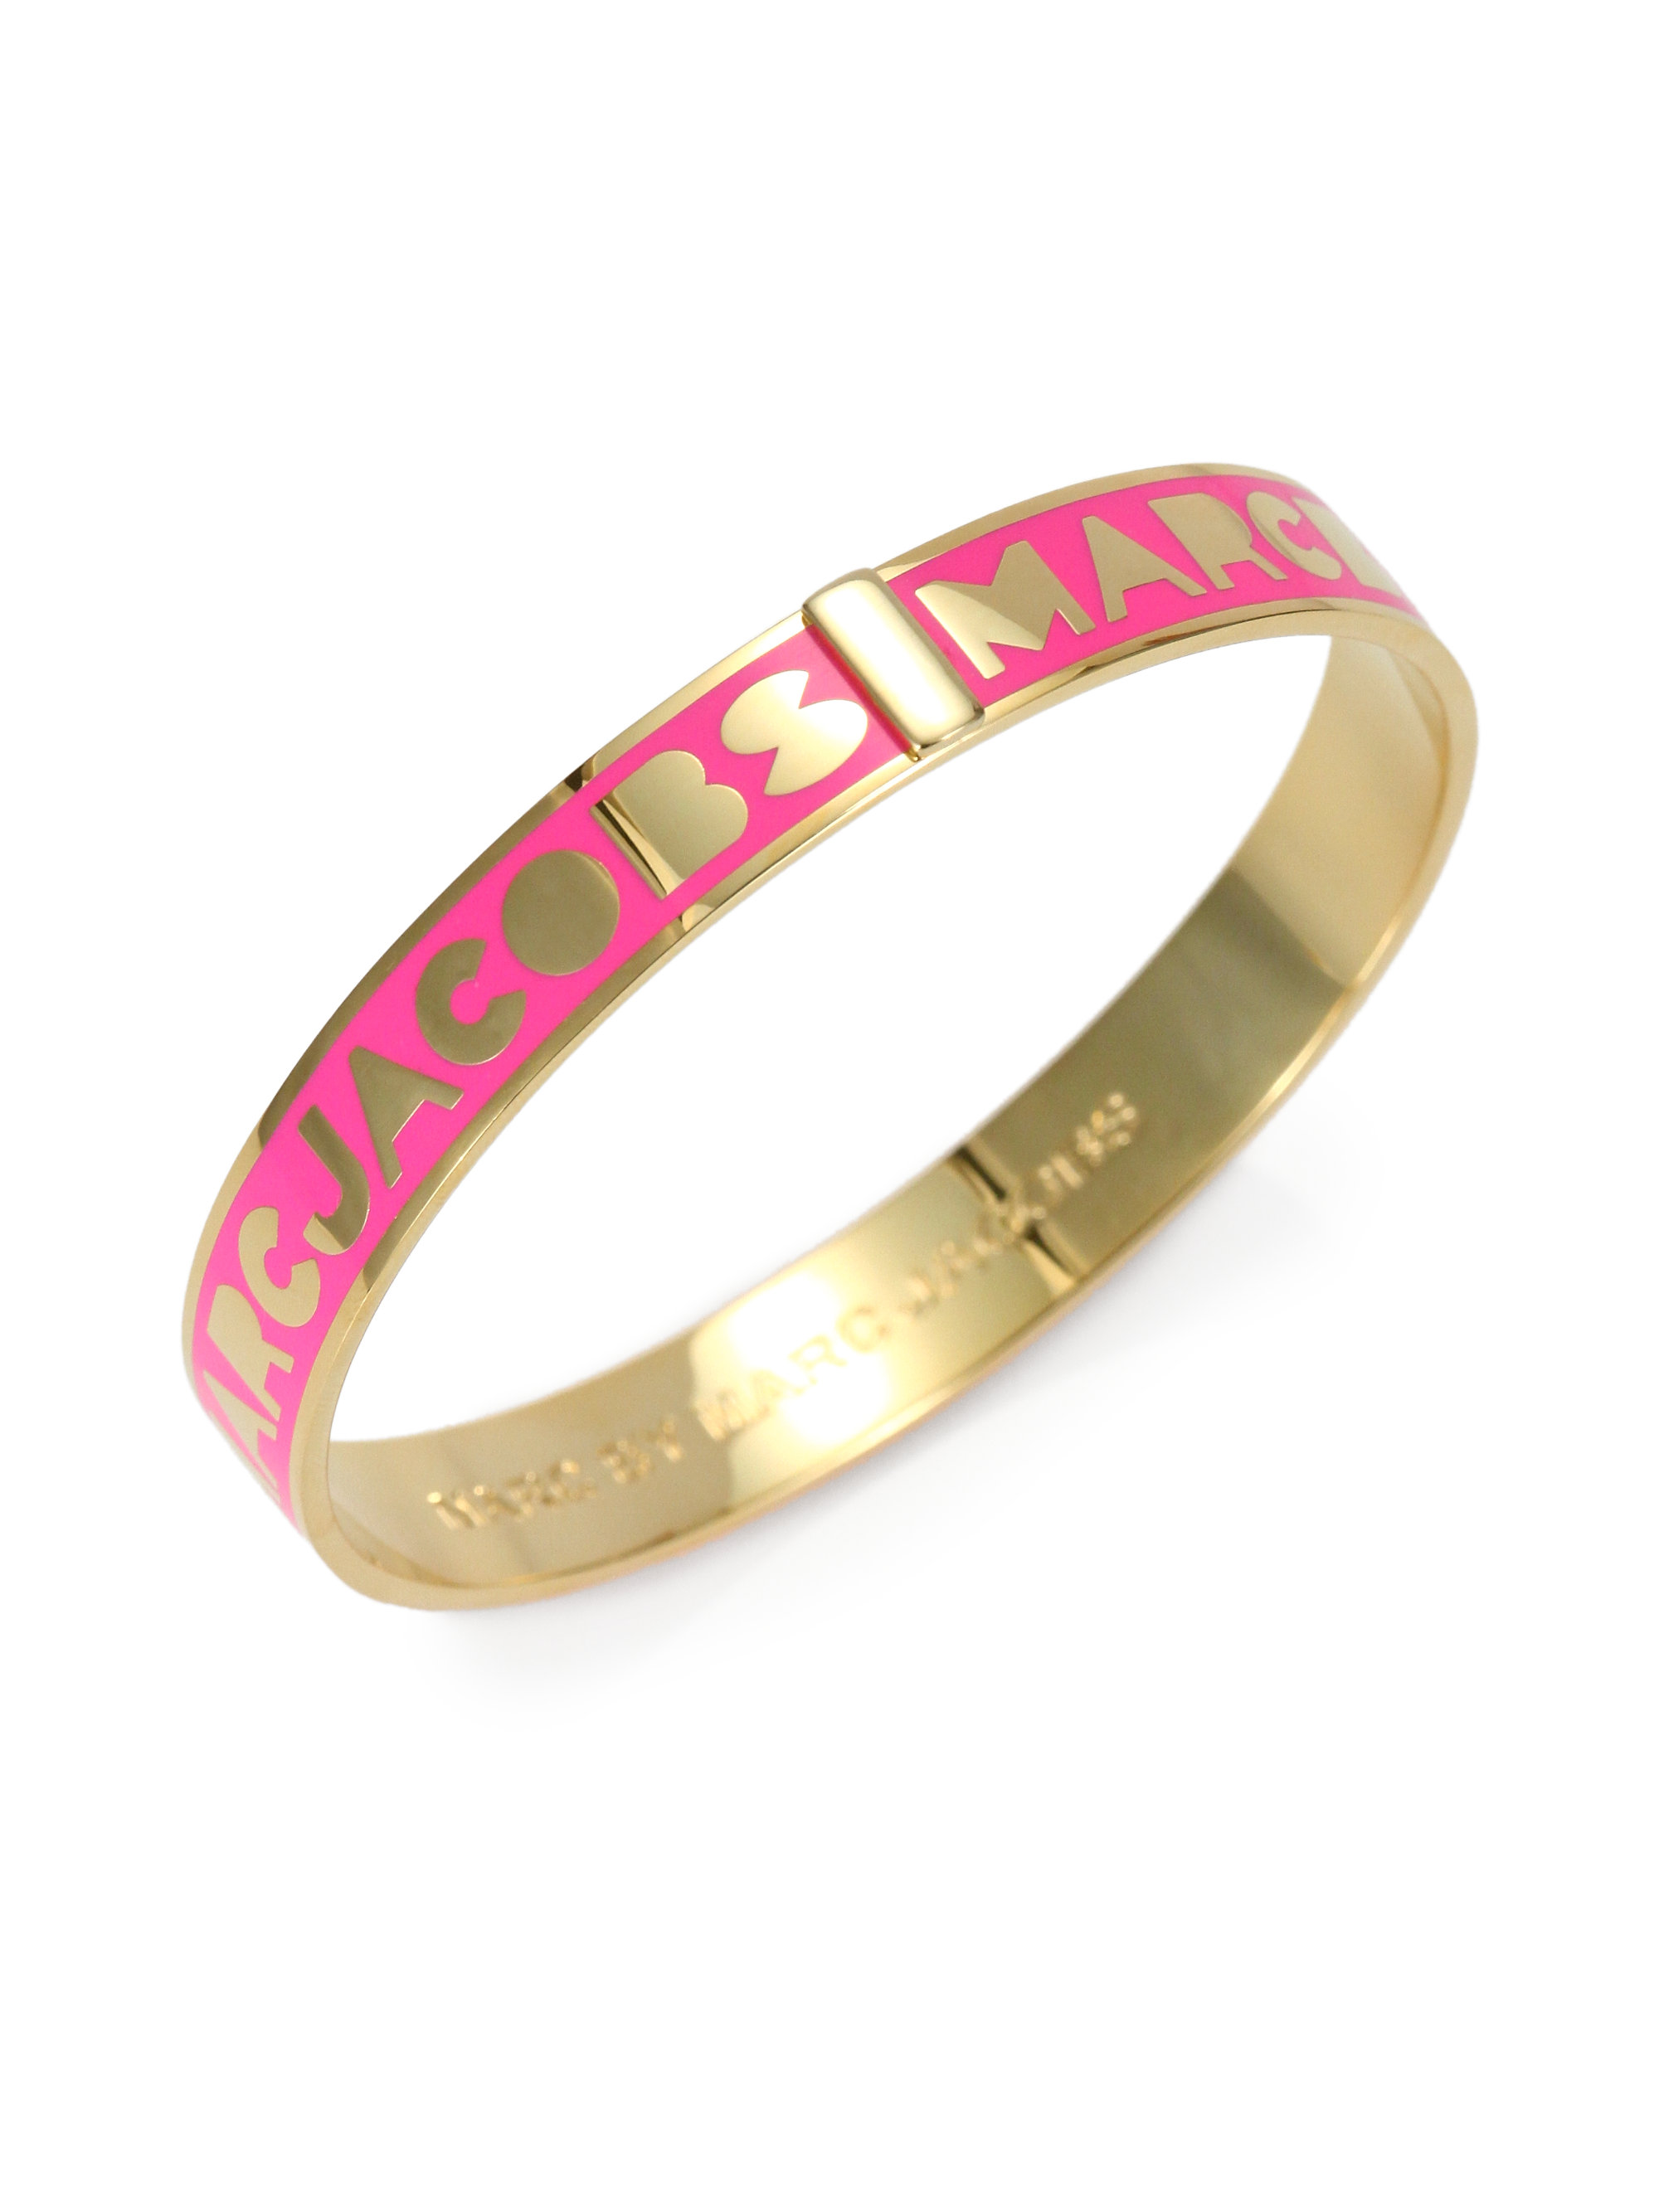 Marc By Marc Jacobs Enamel Logo Bangle Bracelet in Pink-Gold (Pink) - Lyst